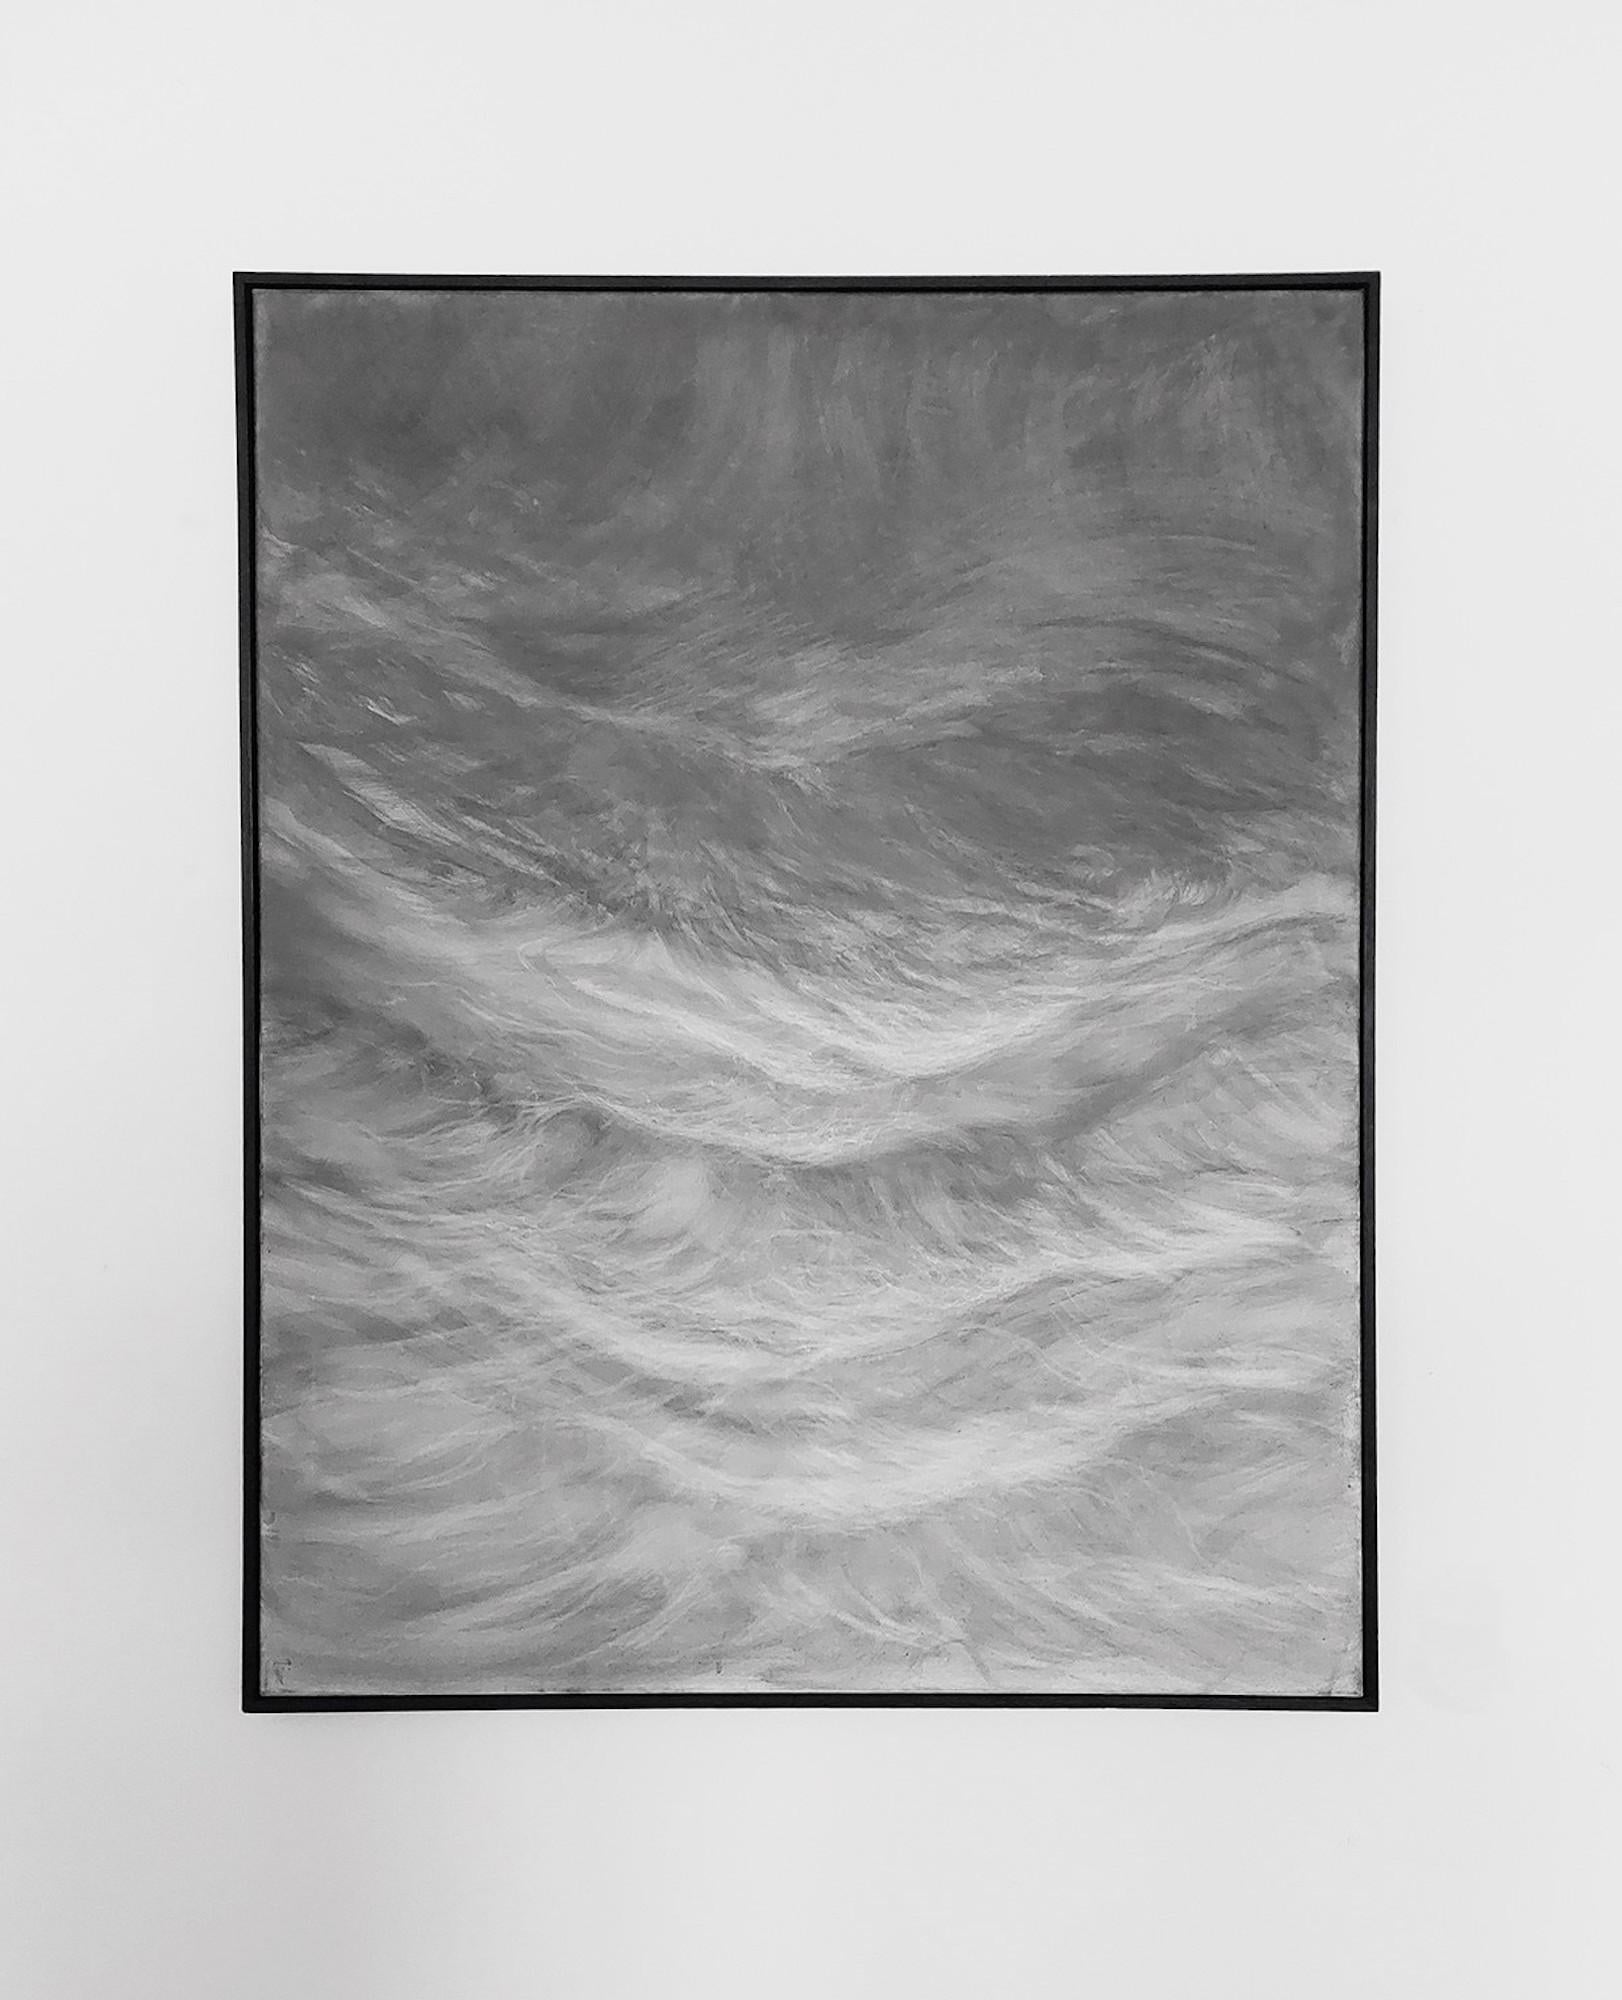 Waves by Franco Salas Borquez - Contemporary seascape painting, ocean, dark tone For Sale 9